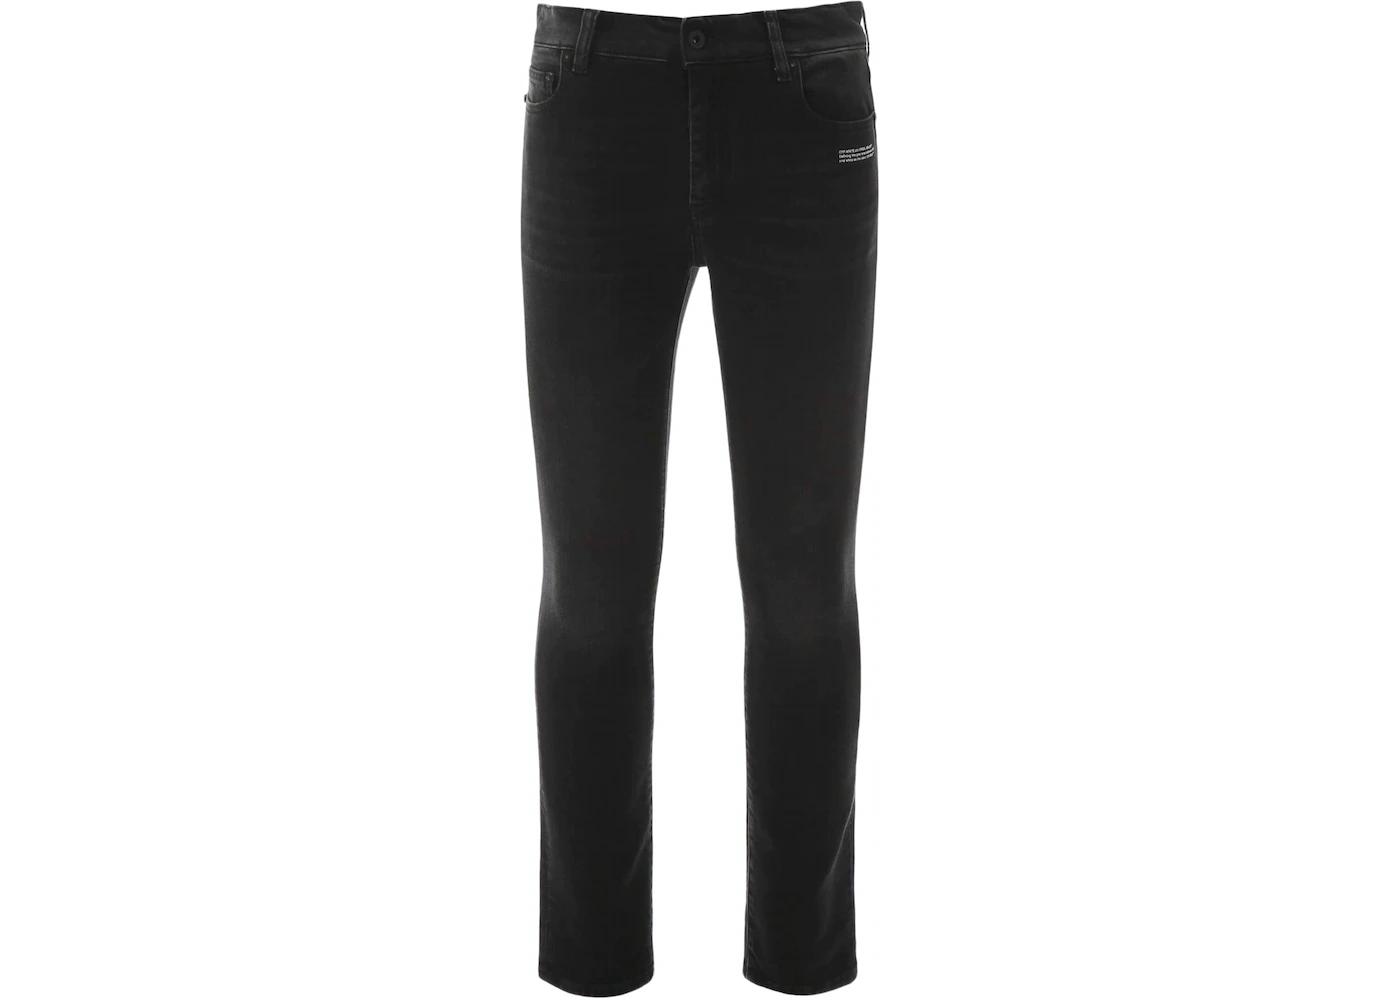 OFF-WHITE Skinny Fit Denim Jeans Black/White by OFF-WHITE